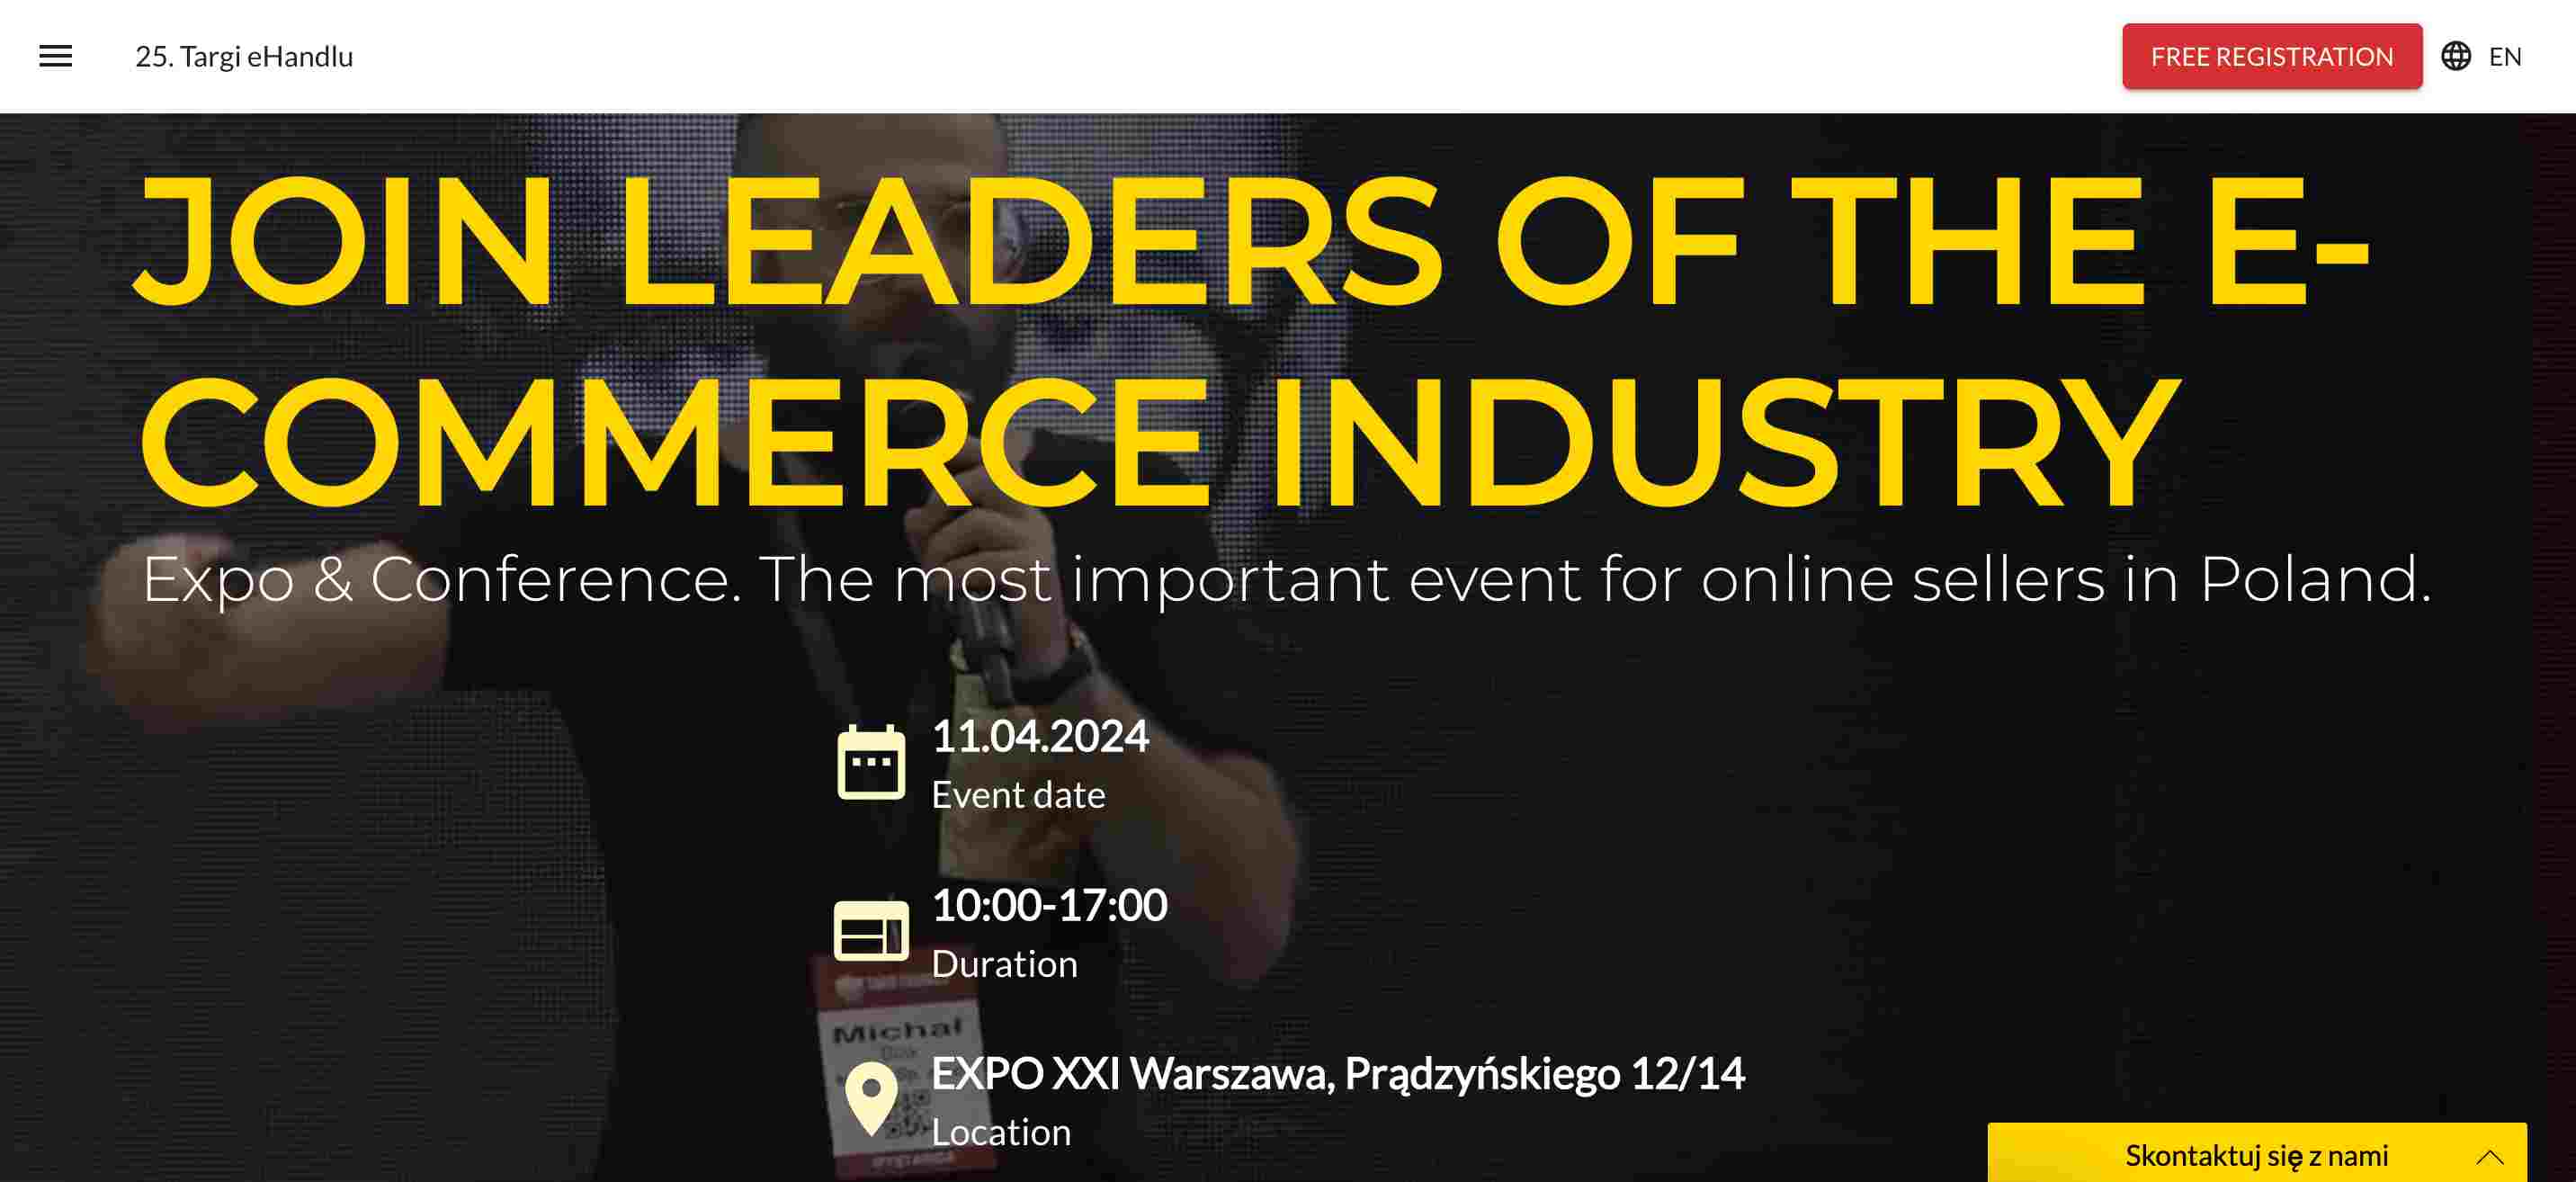 E-Commerce Warsaw Expo